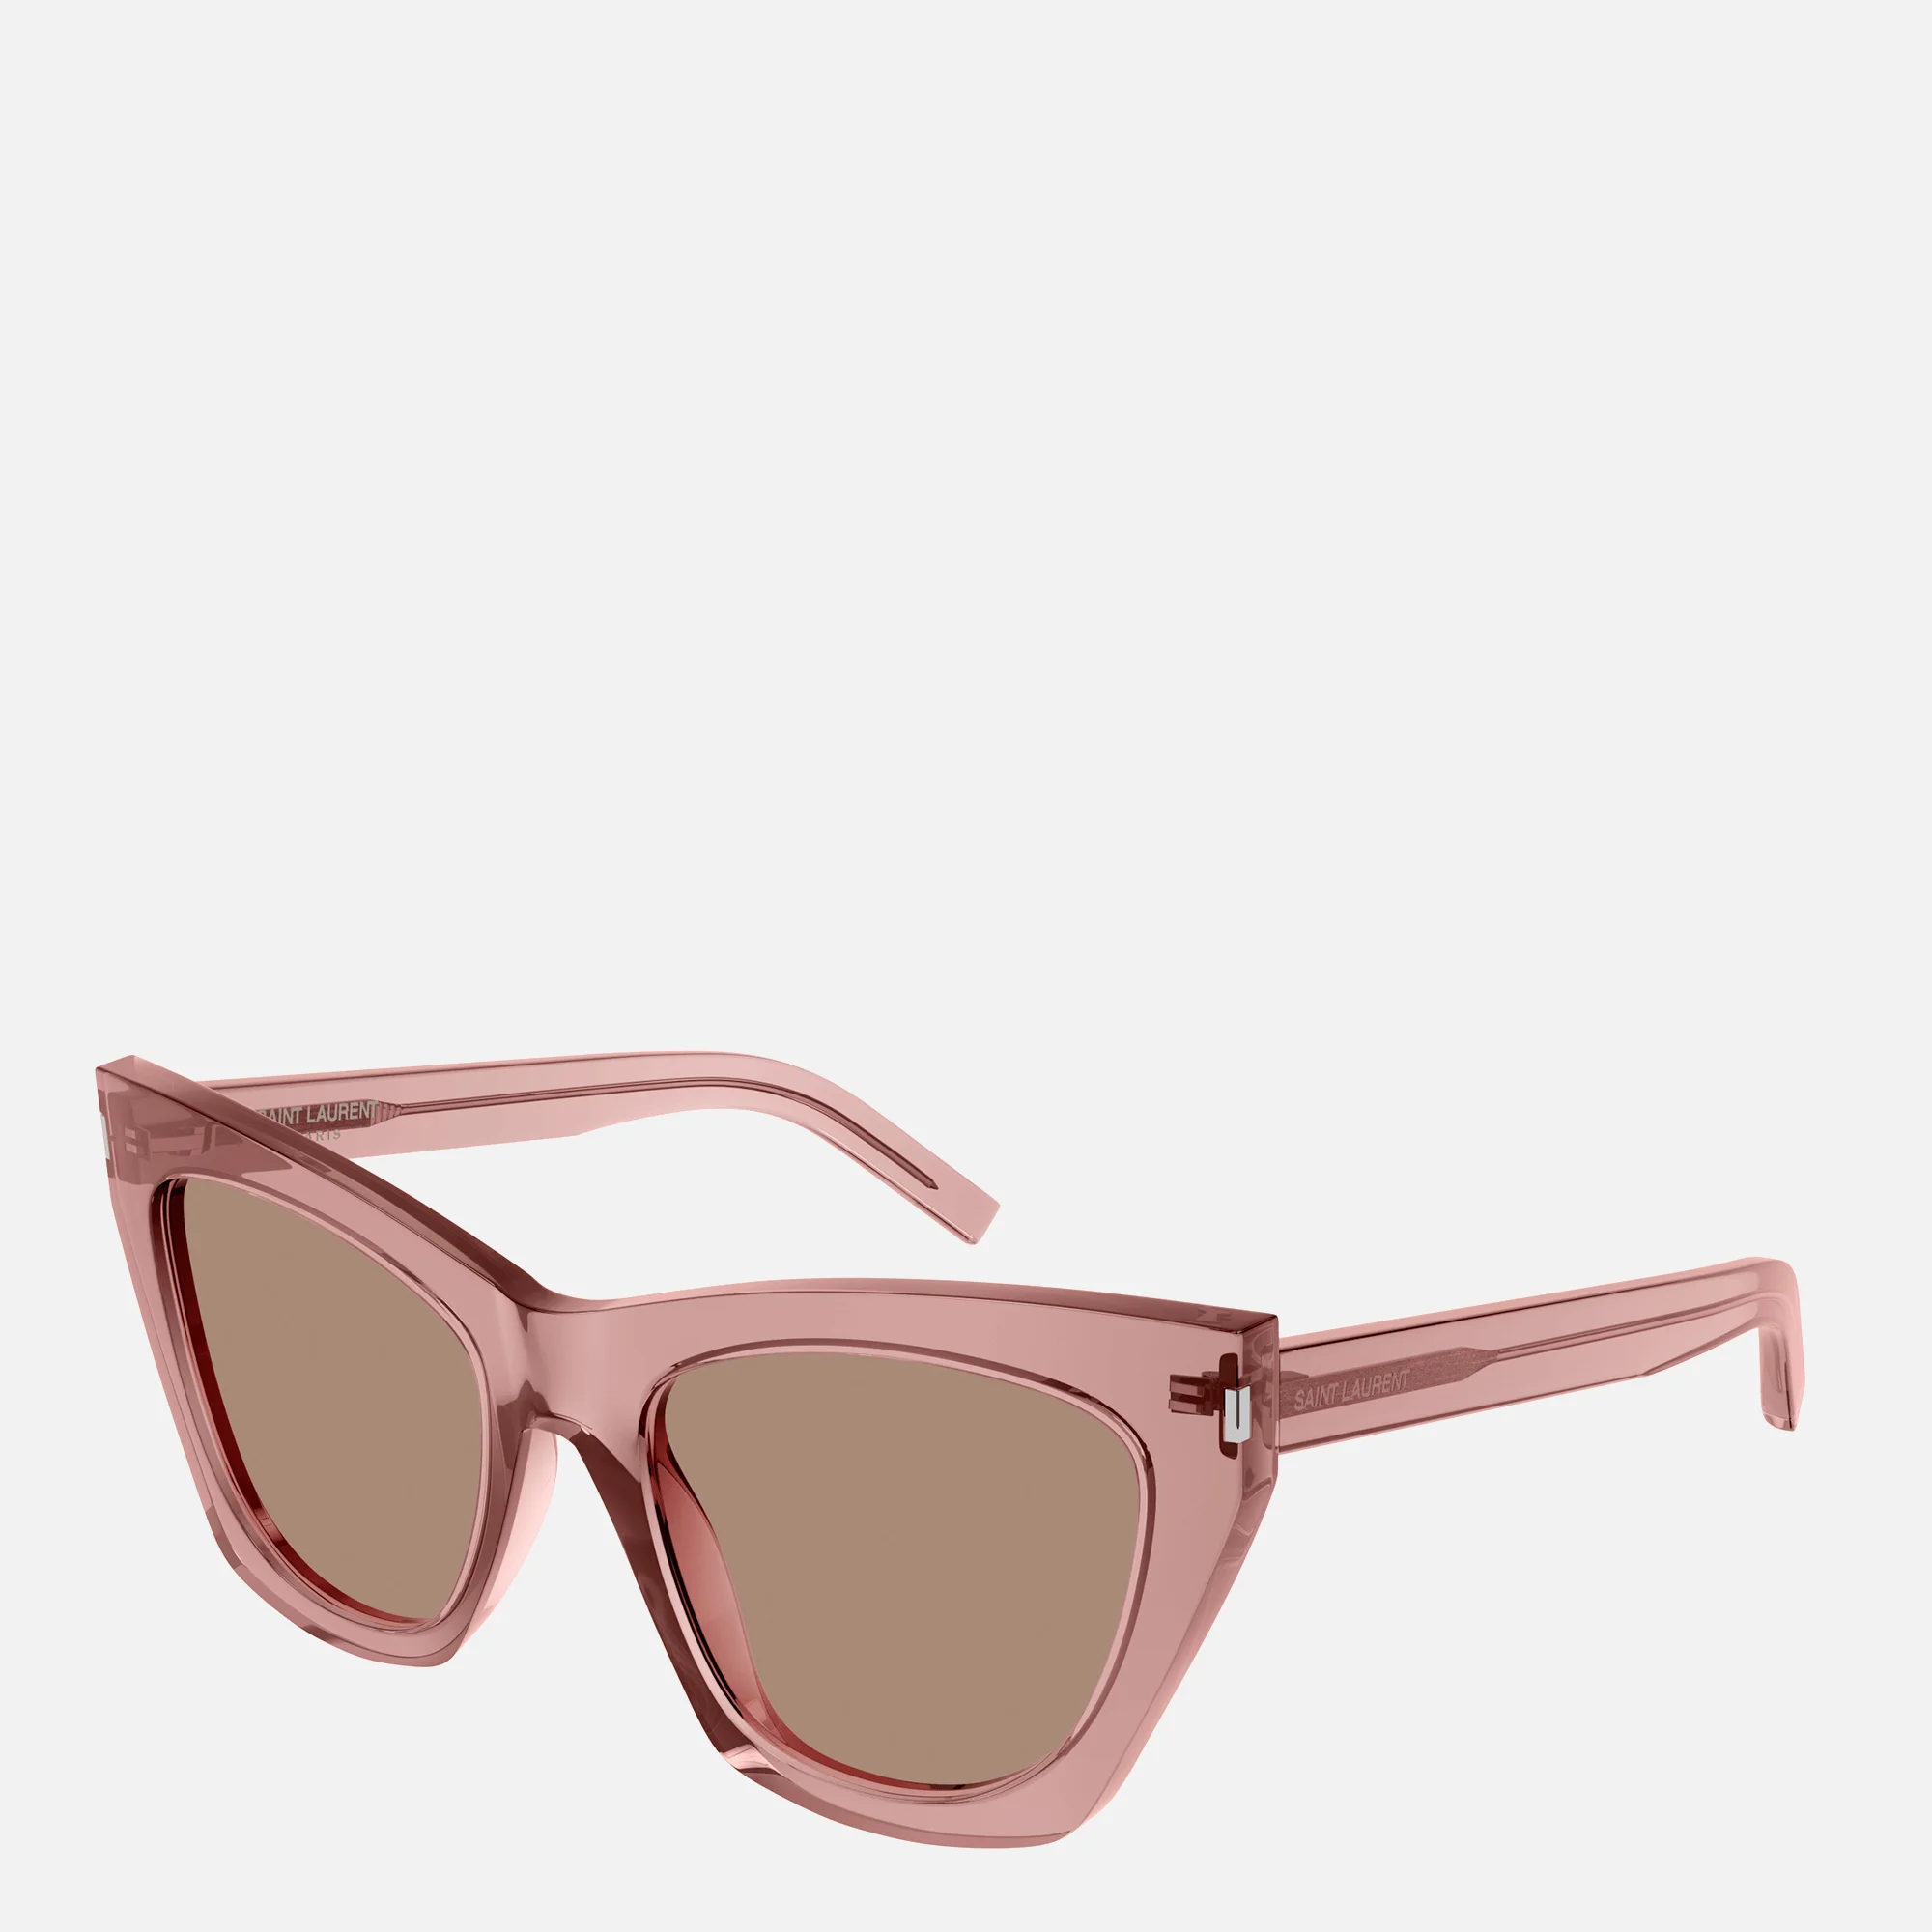 Saint Laurent Women's Kate Cat Eye Sunglasses - Pink/Brown Image 1